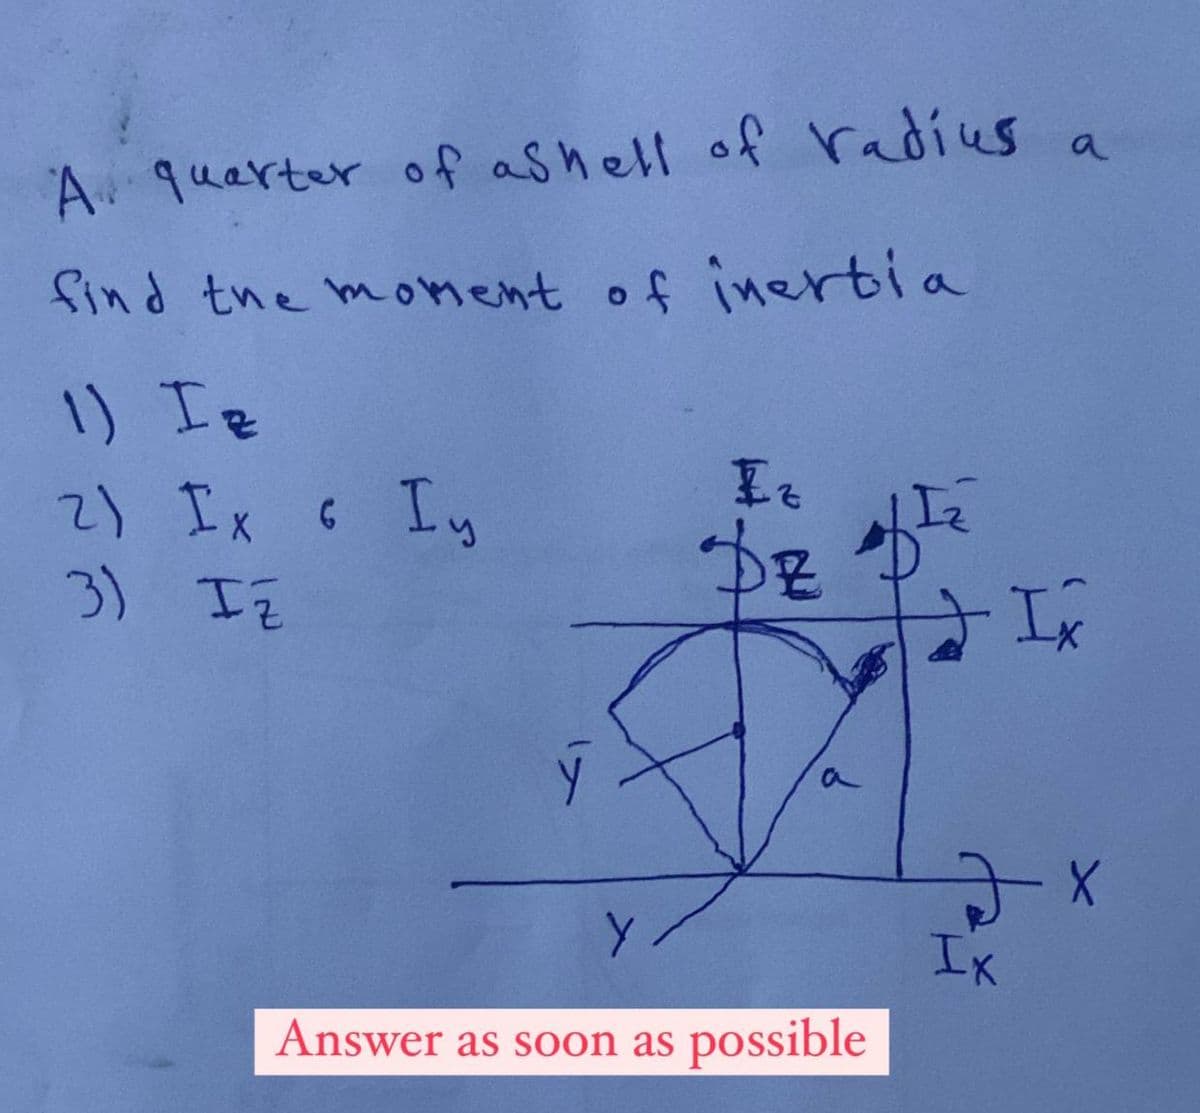 A quarter of ashell of radius a
find the moment of inertia
1) Ie
2) Ix c Iy
6
3) IZ
Iz
DE
a
Answer as soon as possible
I
эх
Ix